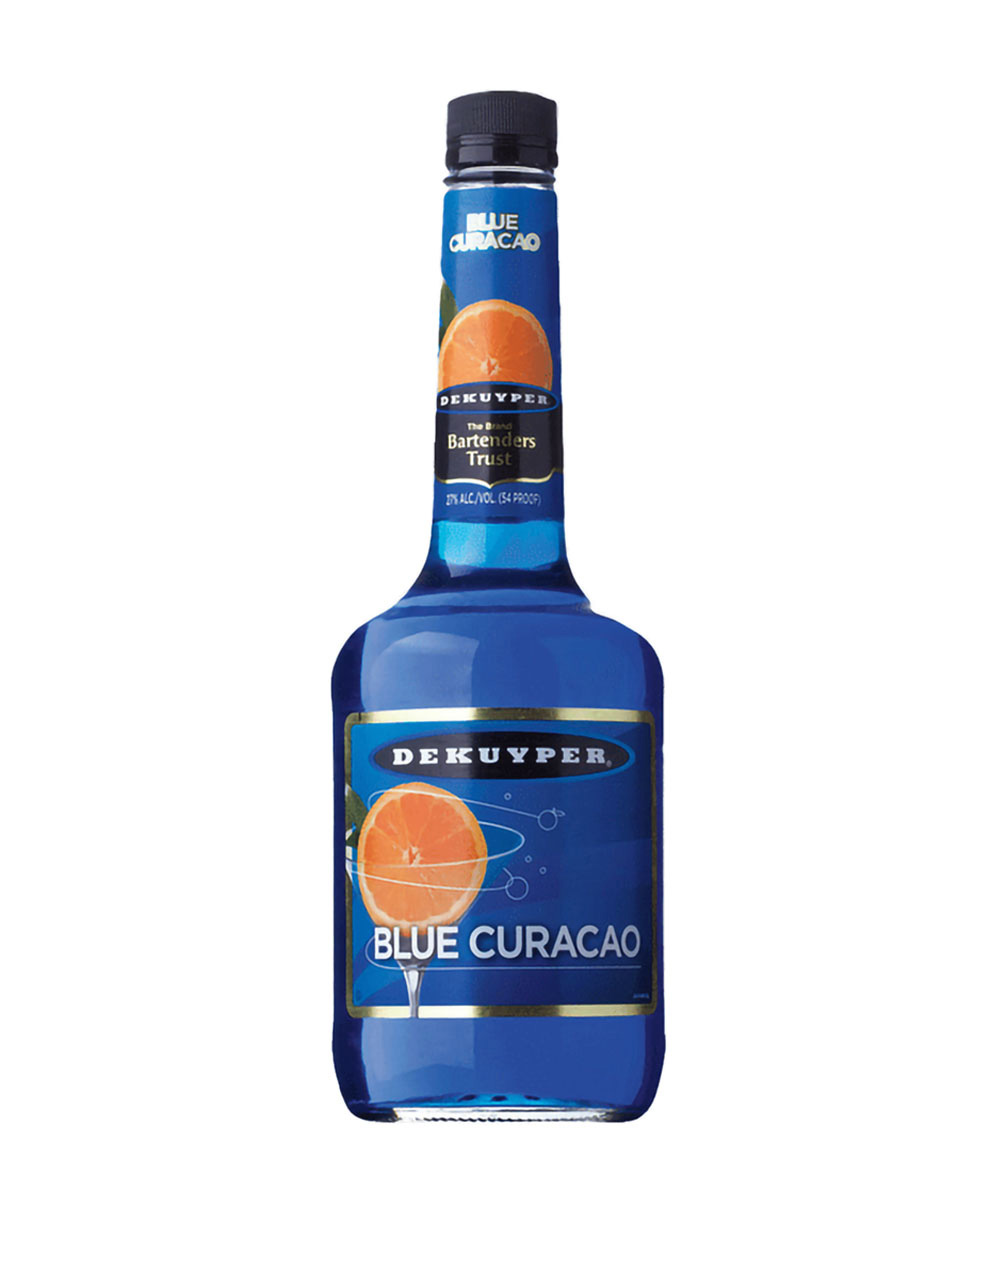 Dekuyper Curacao Blue Liqueur